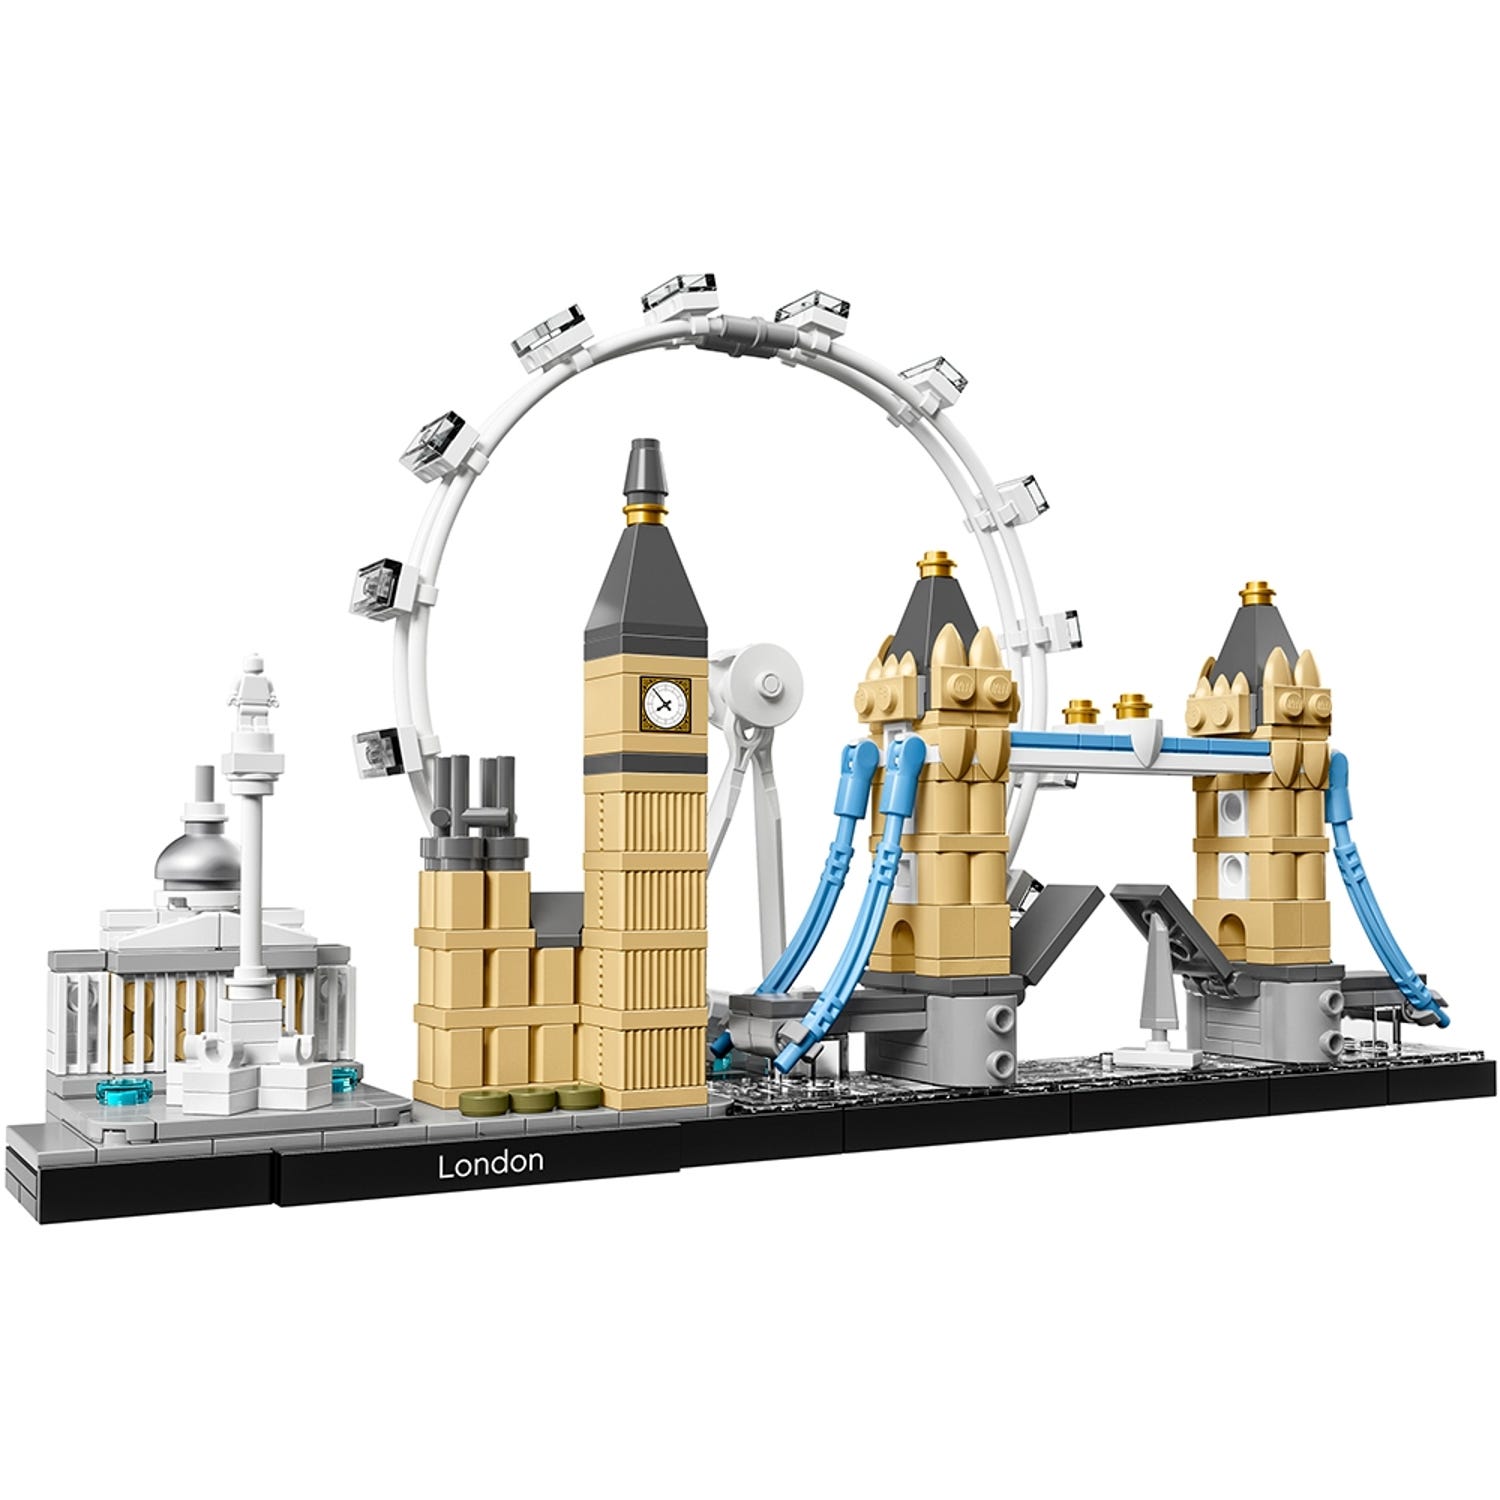 øretelefon Antagonisme død London 21034 | Architecture | Buy online at the Official LEGO® Shop US